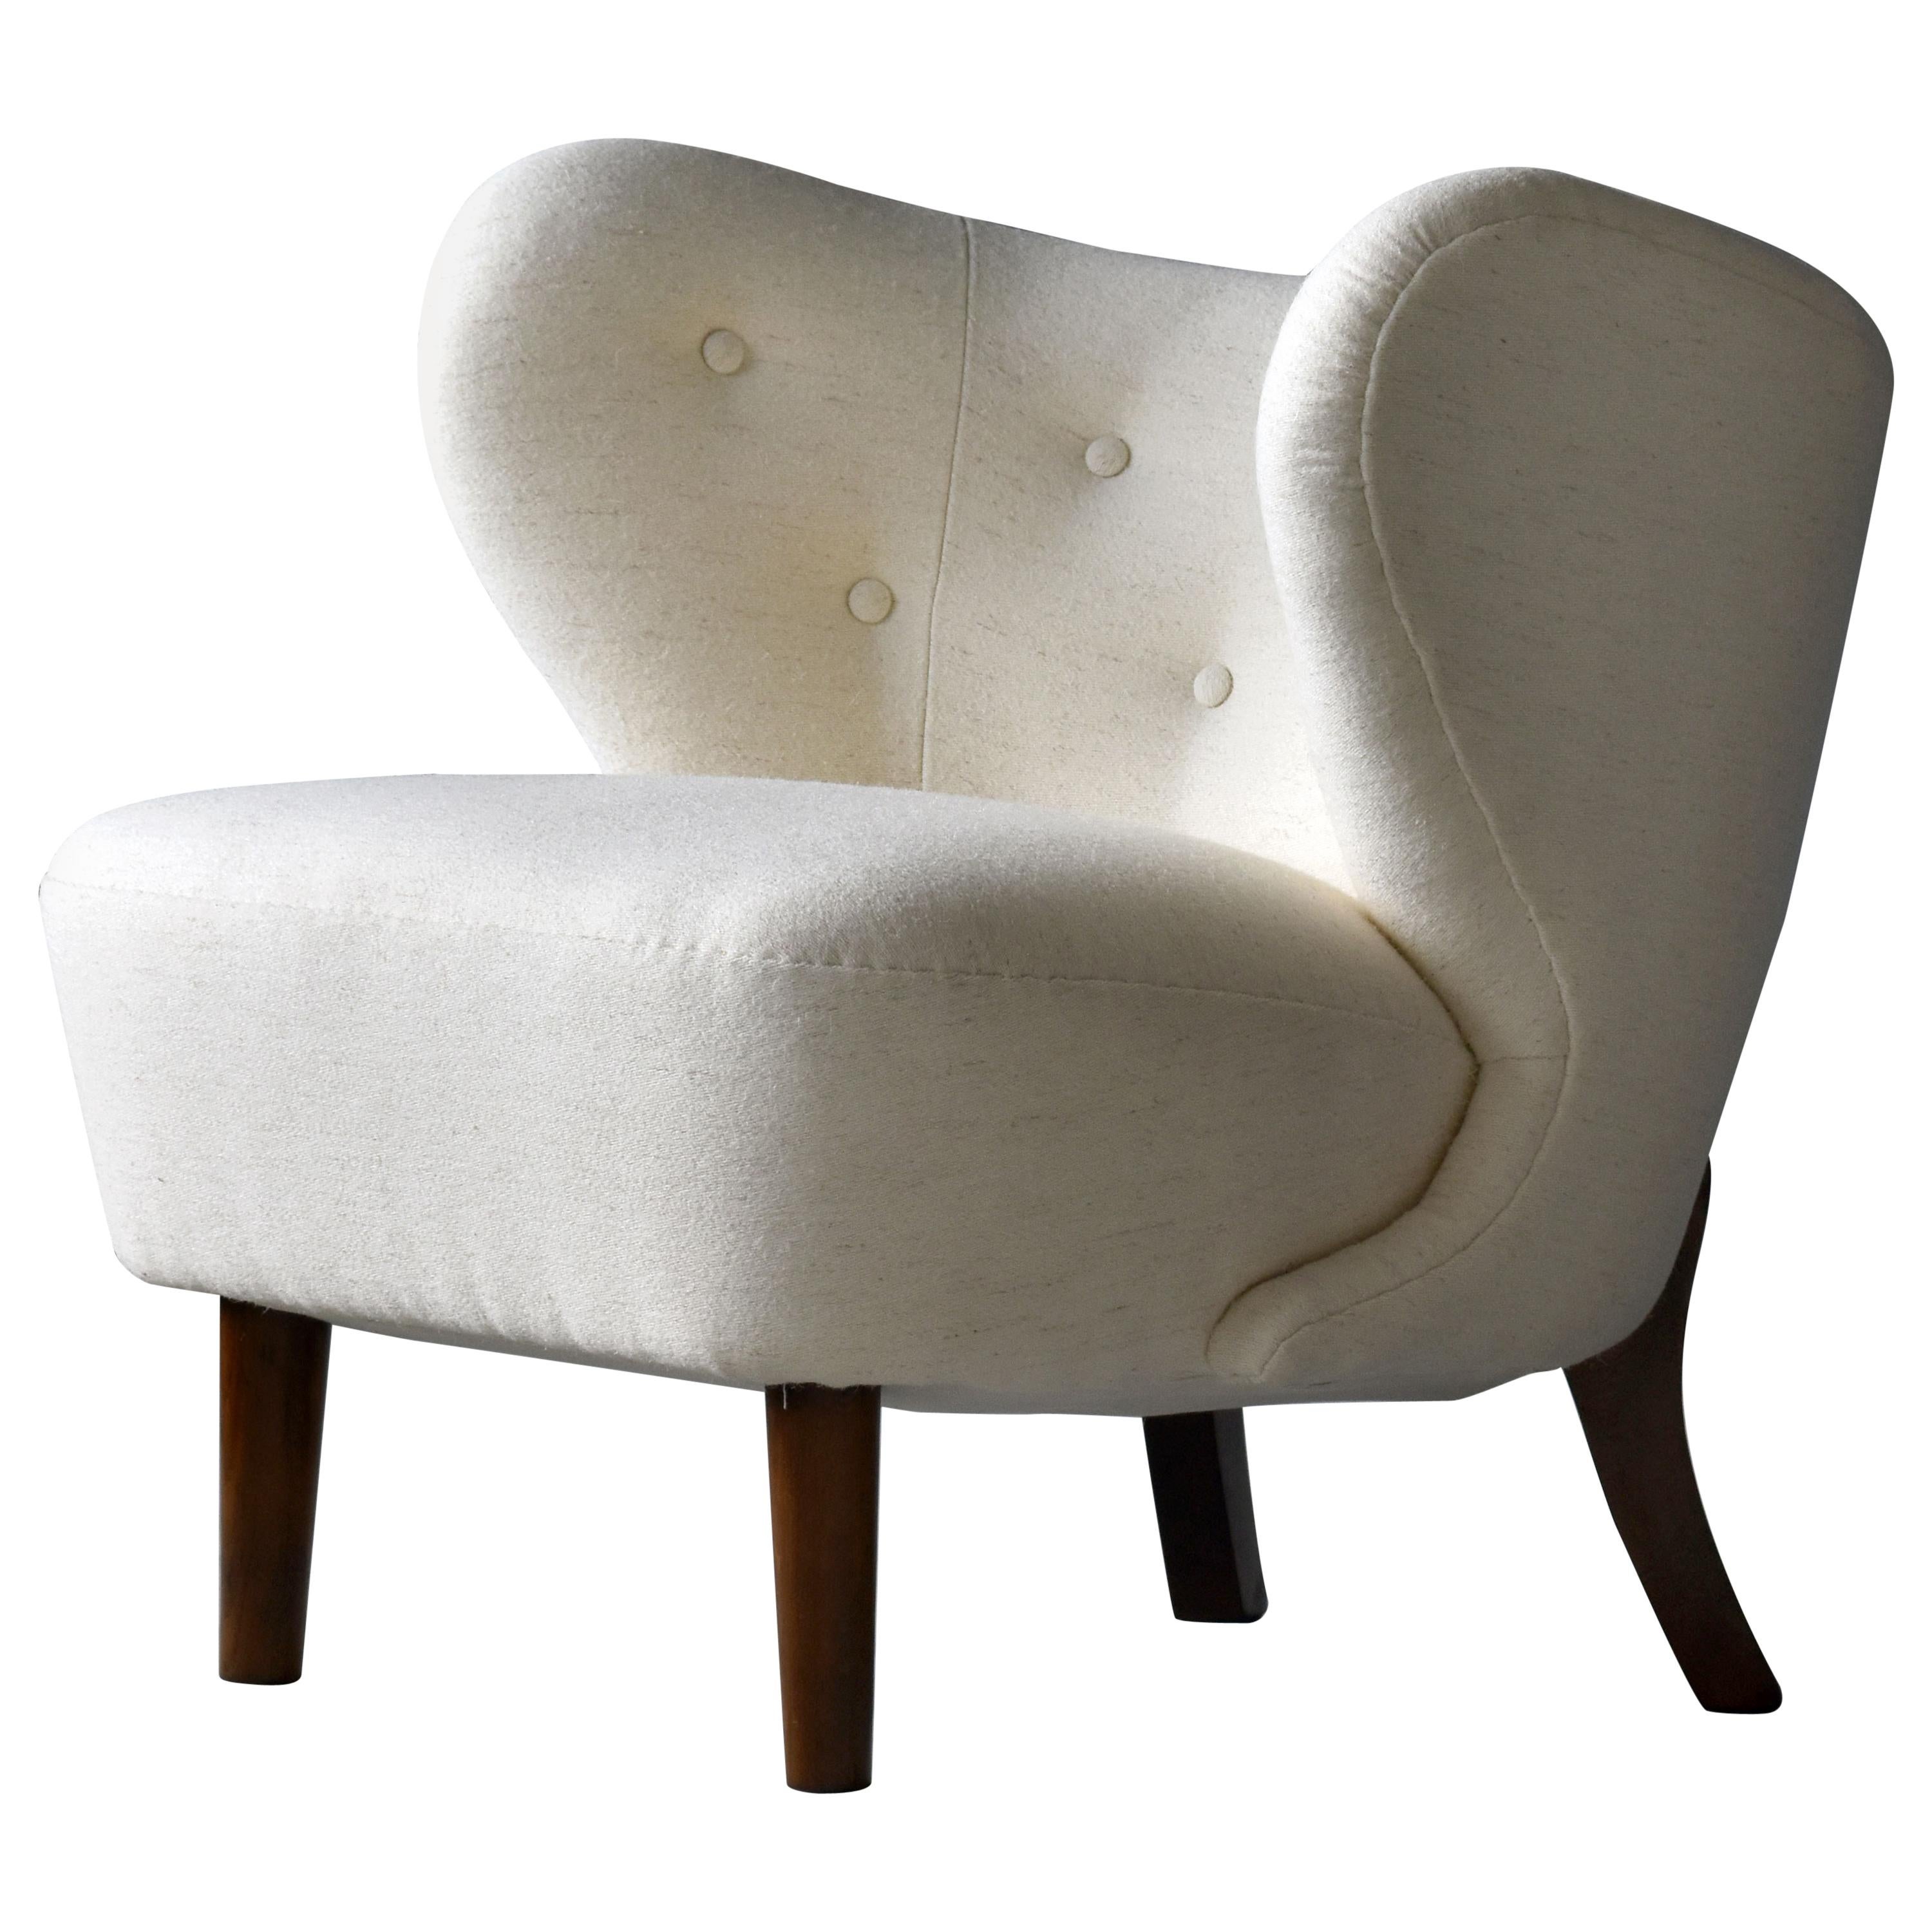 Viggo Boesen Attributed Lounge Chair, White Fabric, Beech, Denmark, circa 1940s